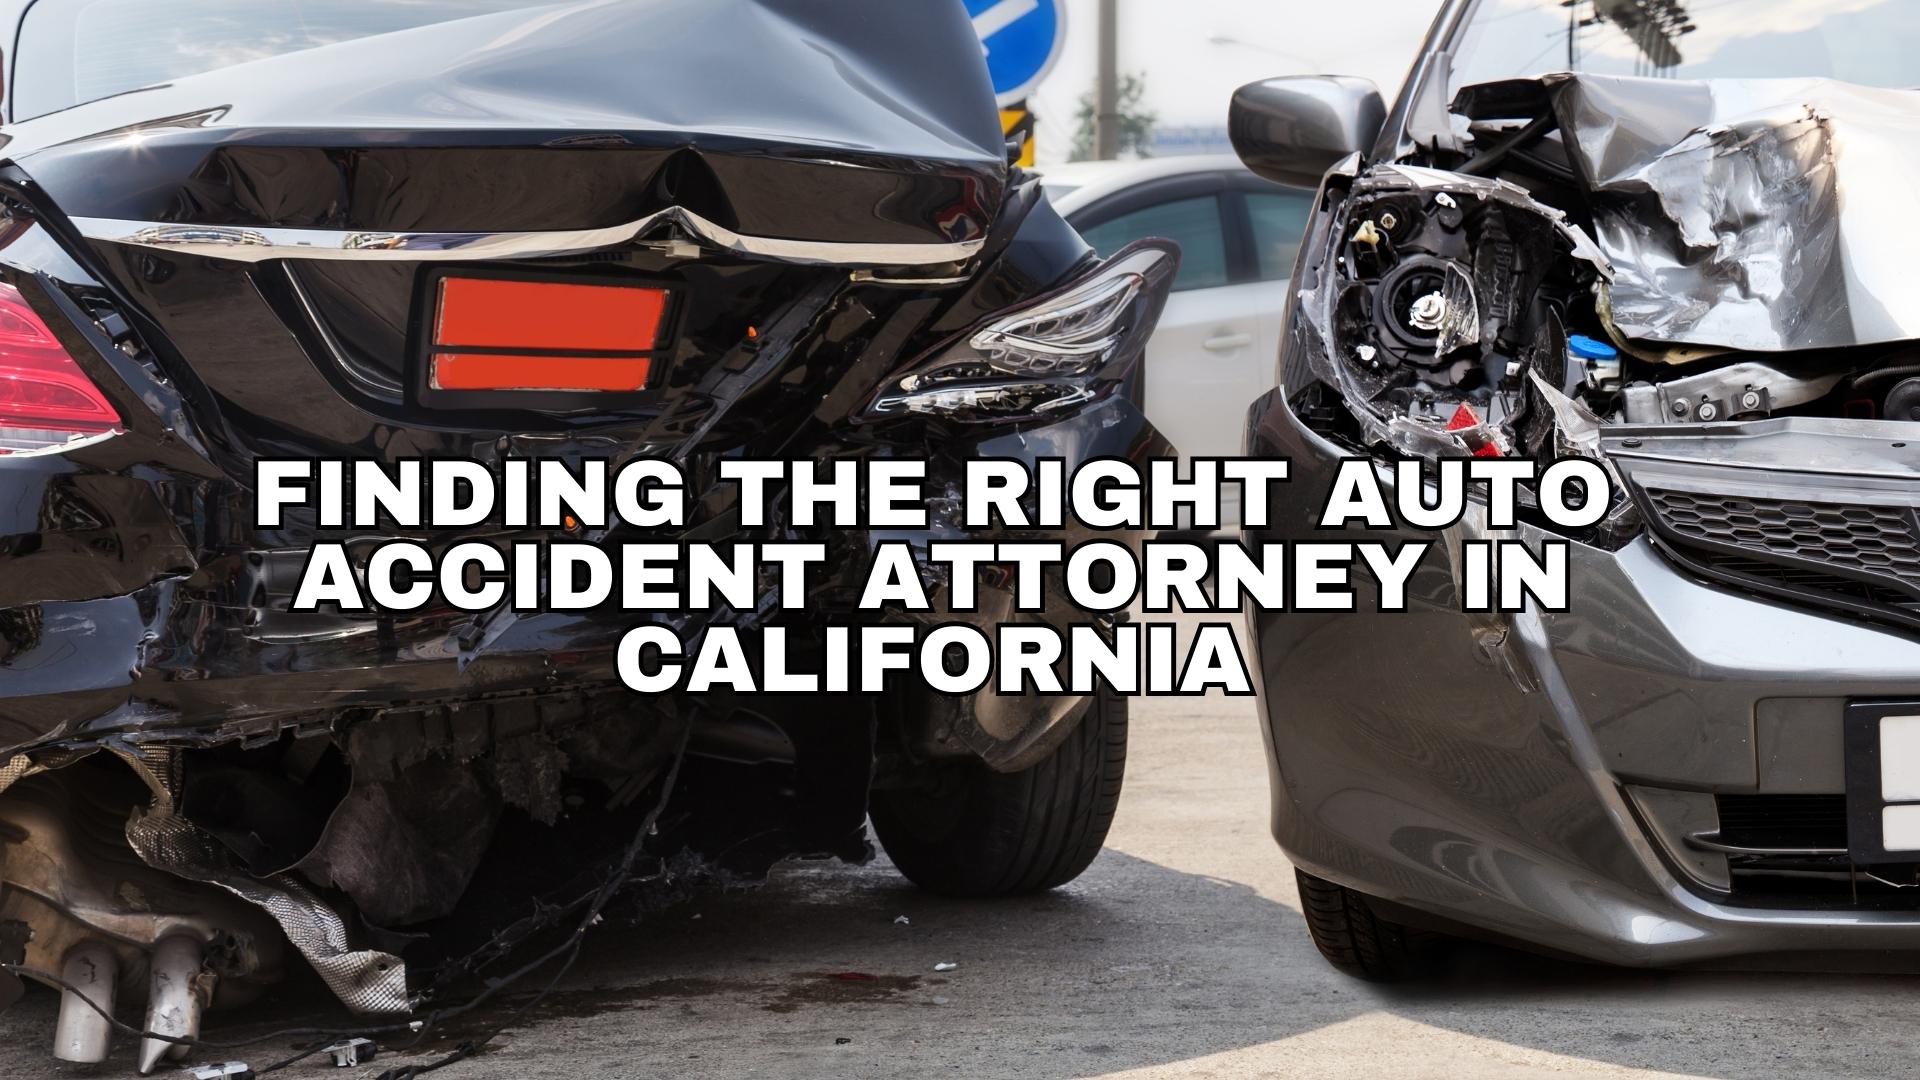 Finding the Right Auto Accident Attorney in California: